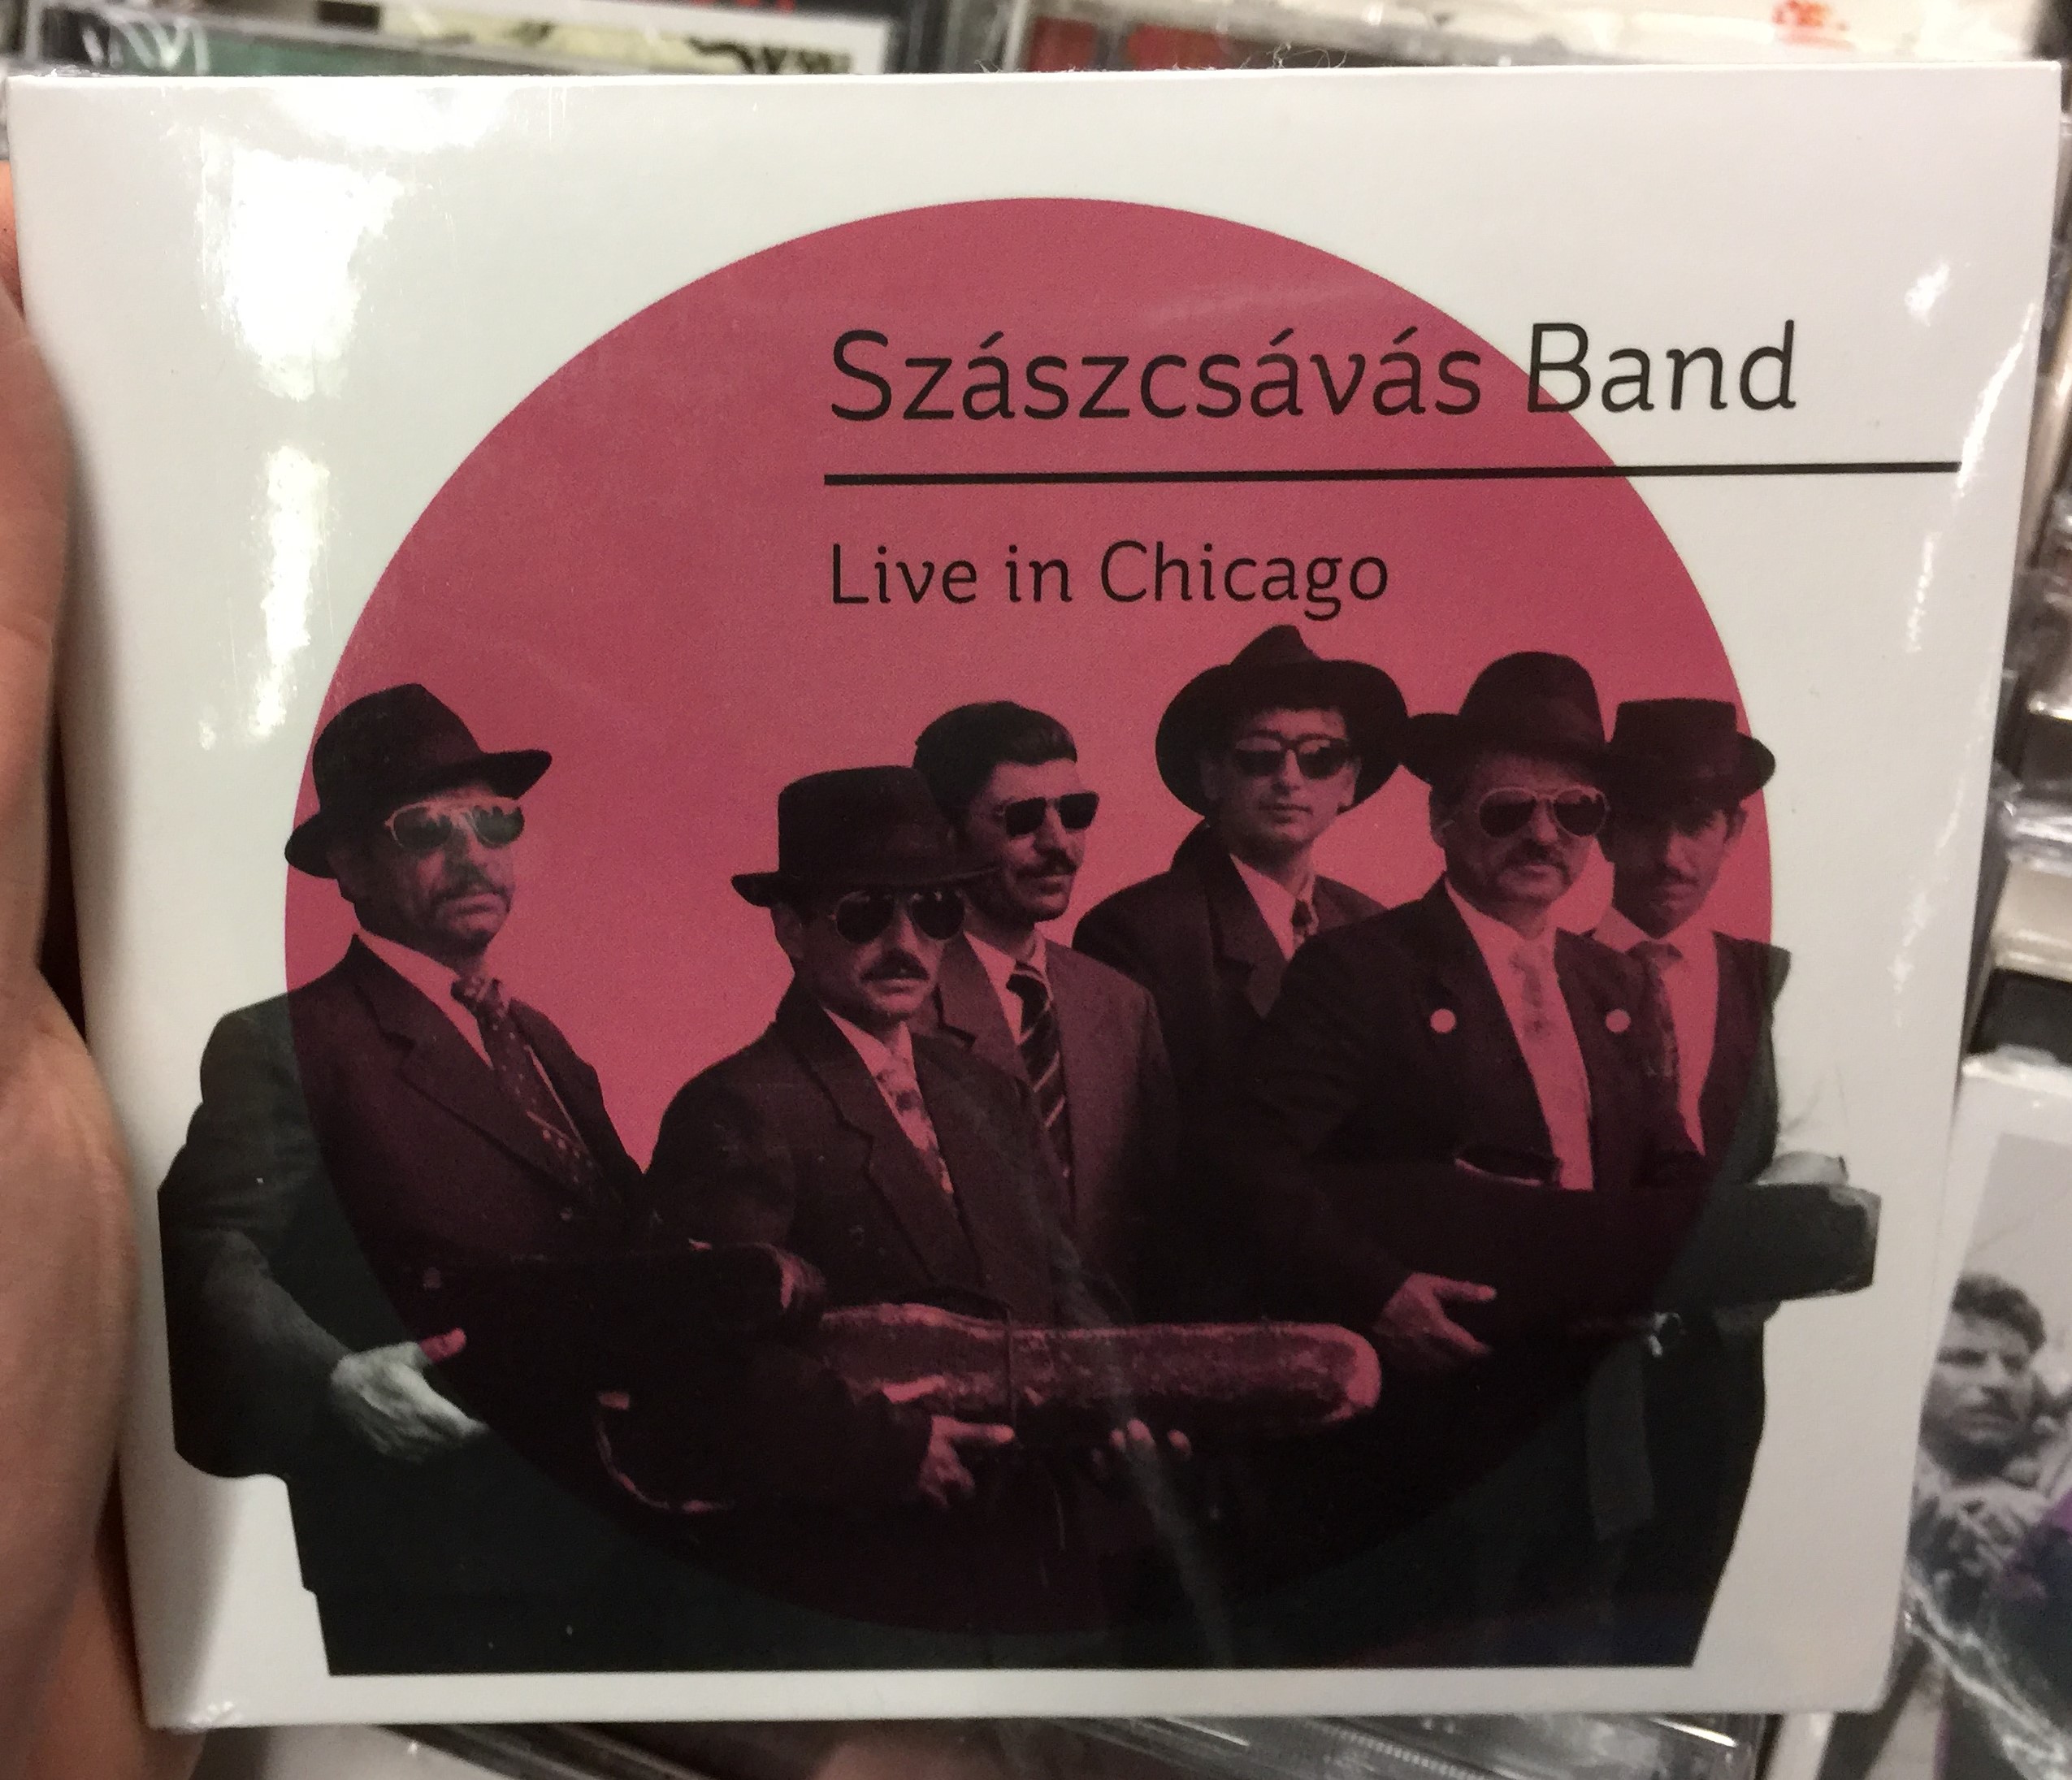 sz-szcs-v-s-band-live-in-chicago-fon-budai-zeneh-z-audio-cd-2016-fa-384-2-1-.jpg